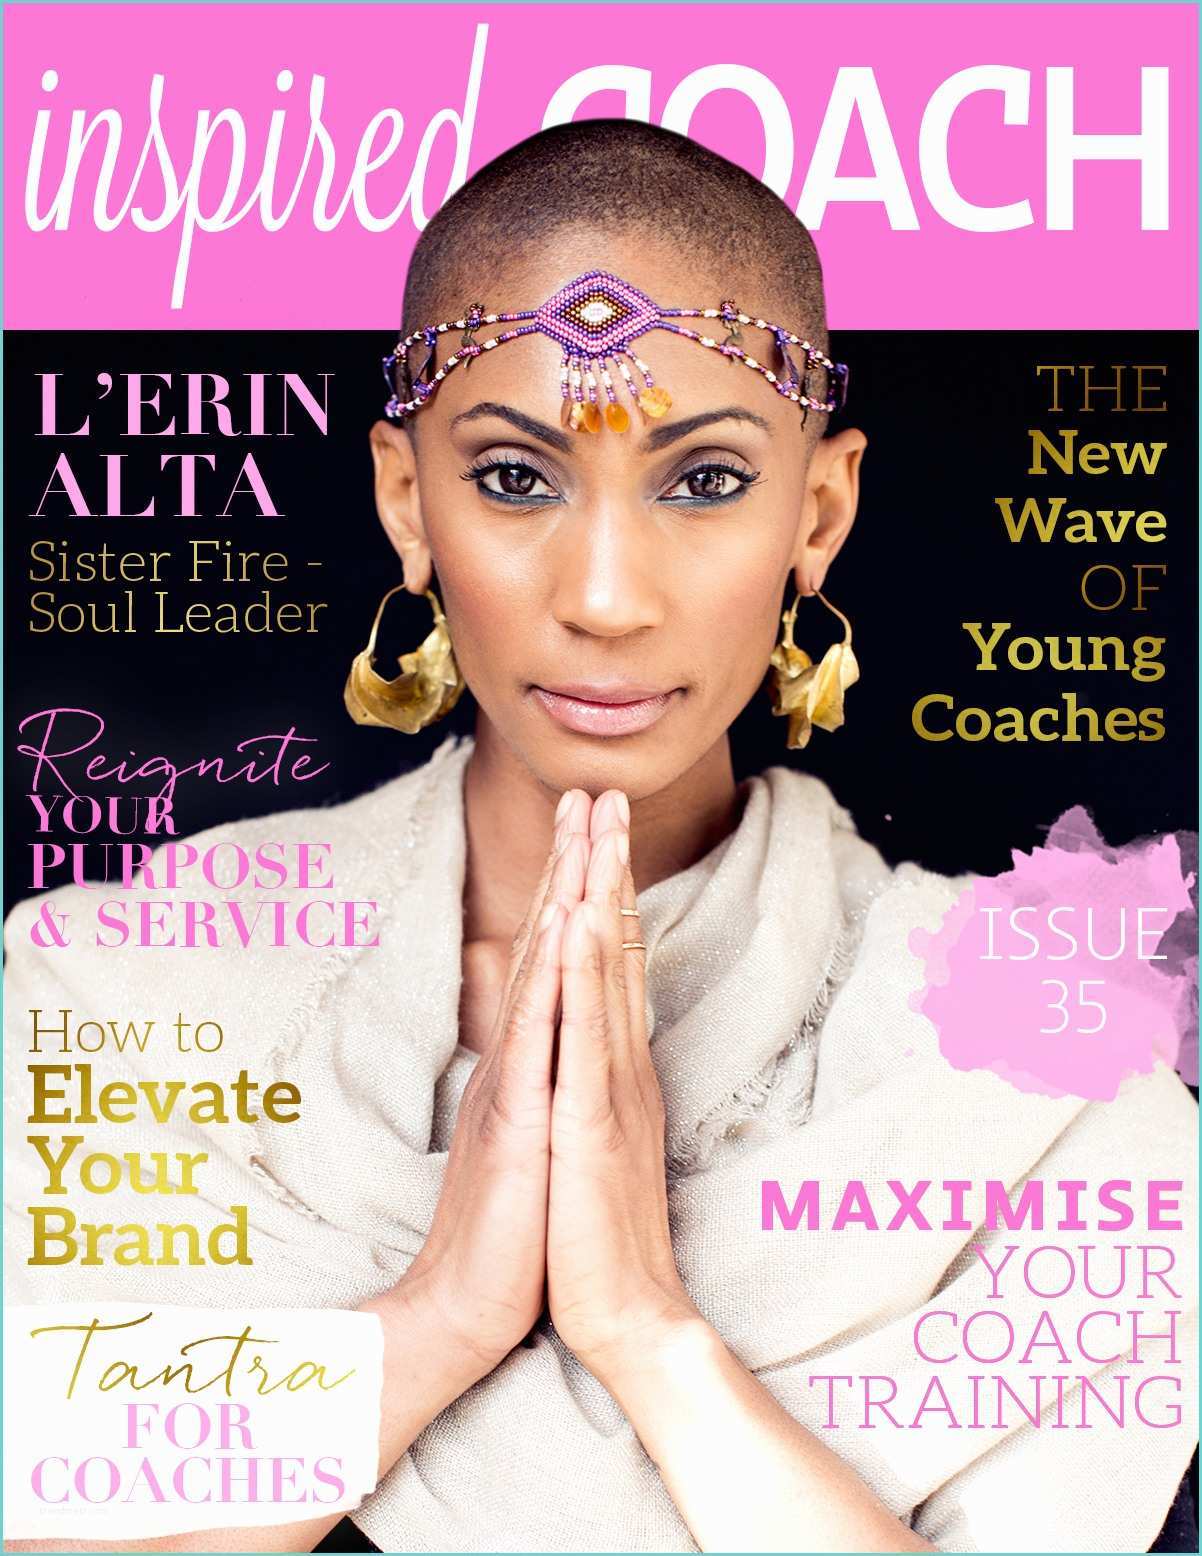 Beautiful You Coaching Academy Reviews Inspired Coach Magazine with L’erin Alta Beautiful You